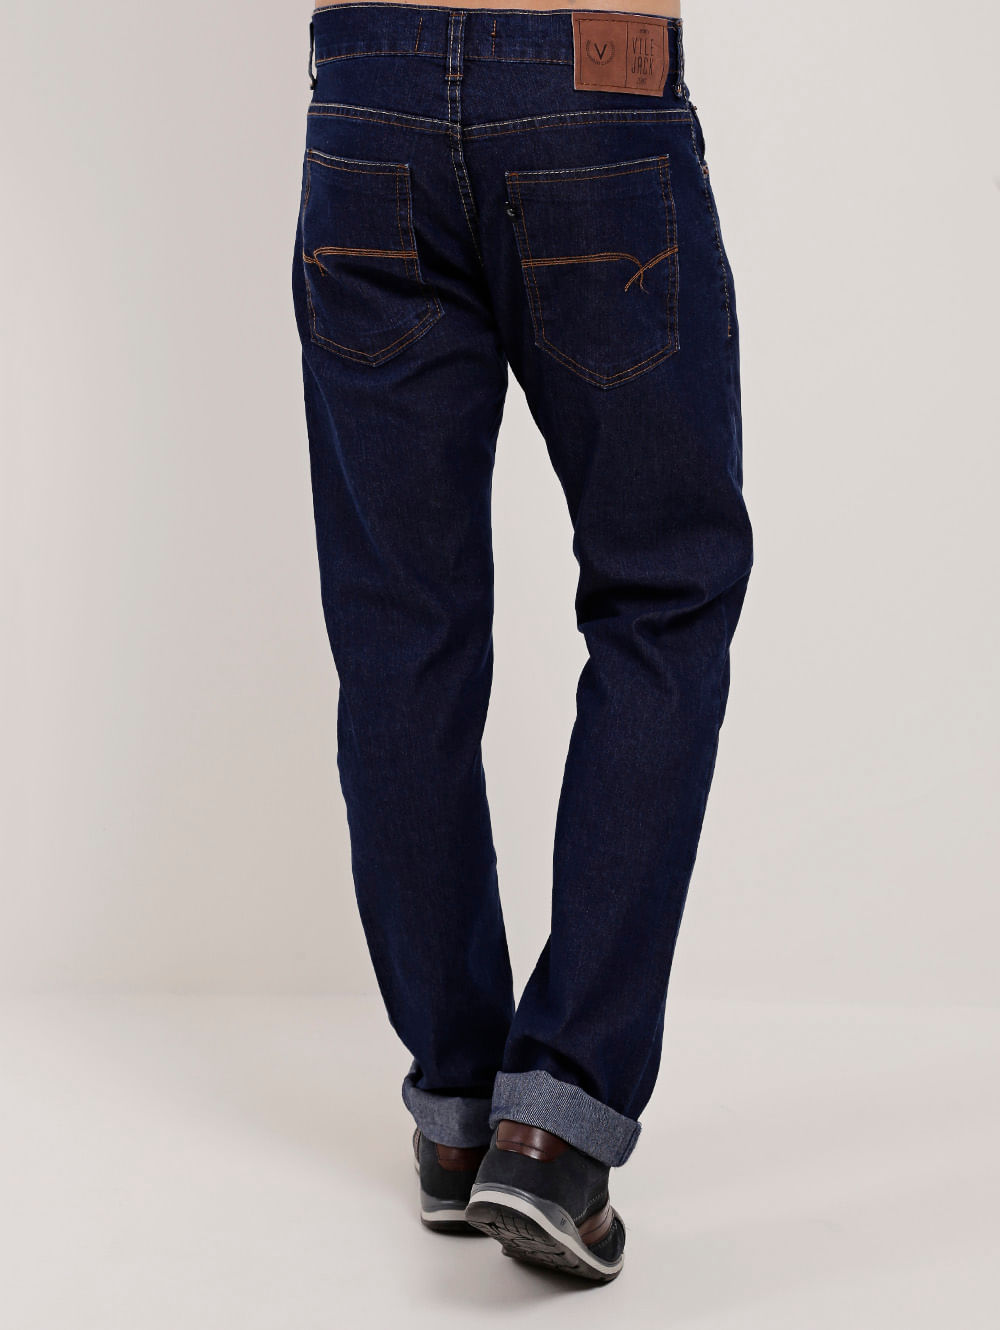 fotos de calça jeans masculina